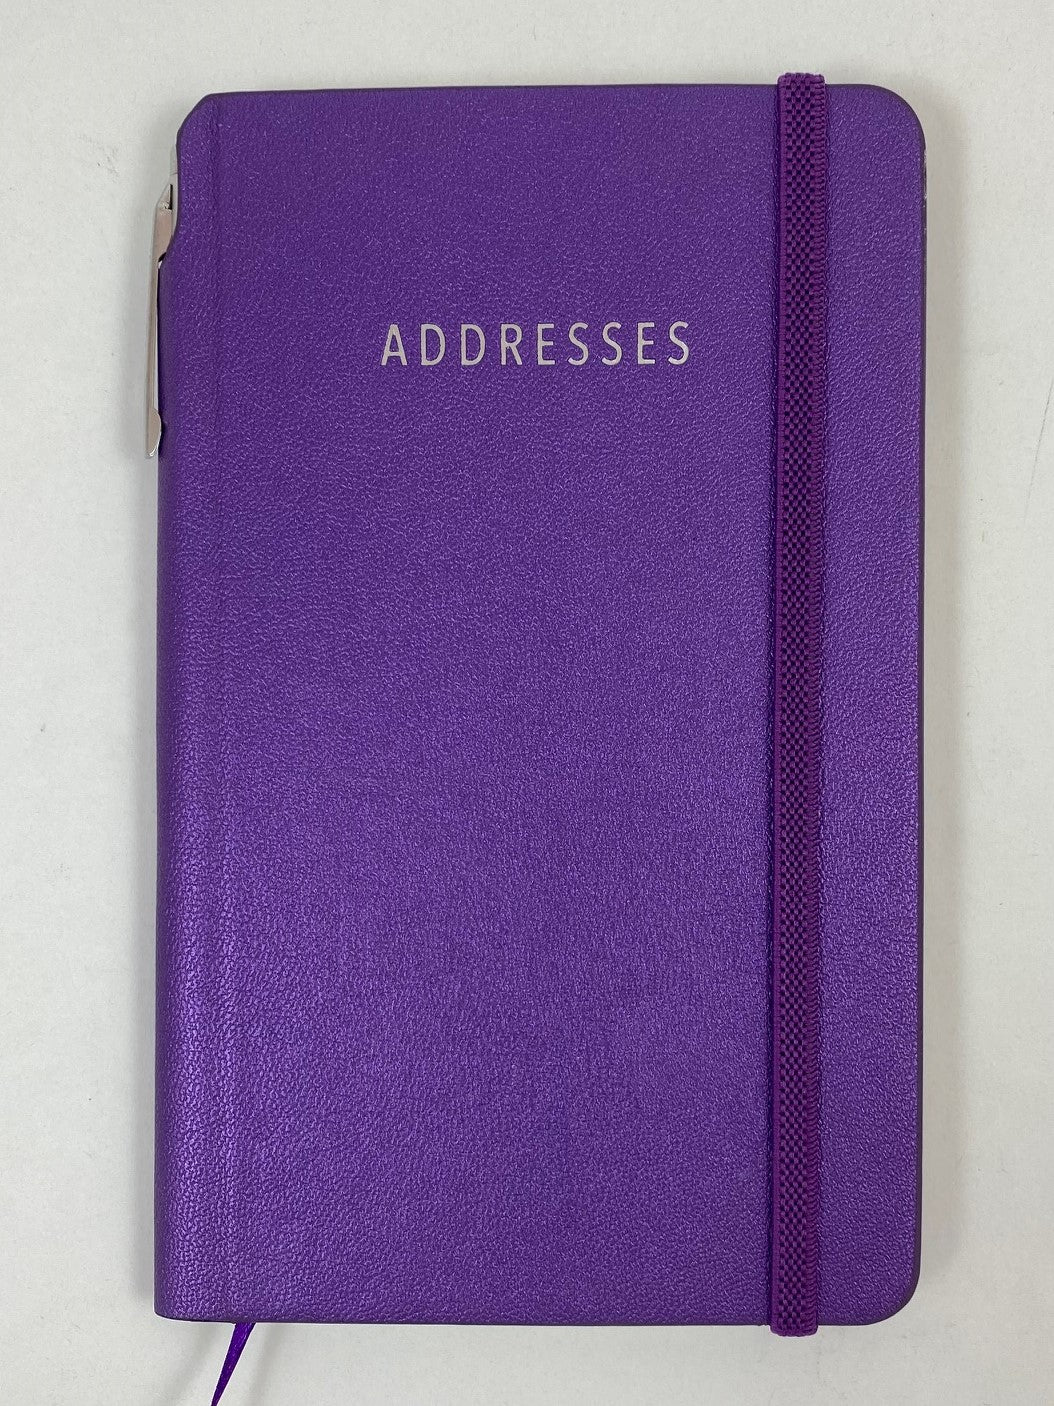 Purse Address Book with Elastic - Grape